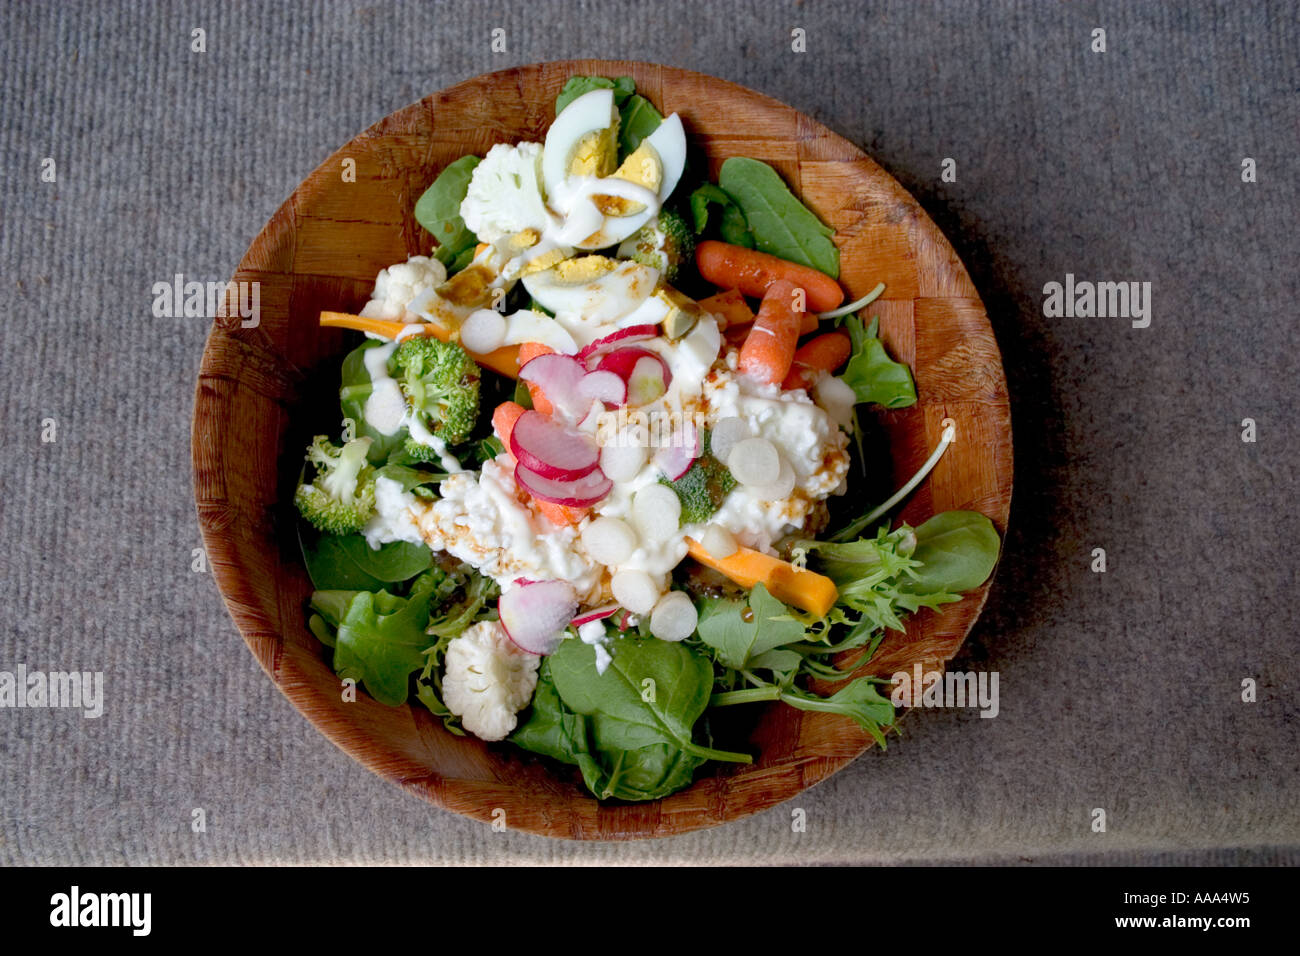 Salat Schale Spinat Karotten Radieschen Käse hart gekochten Eiern, dressing  und Salat gesund essen. St Paul Minnesota MN USA Stockfotografie - Alamy